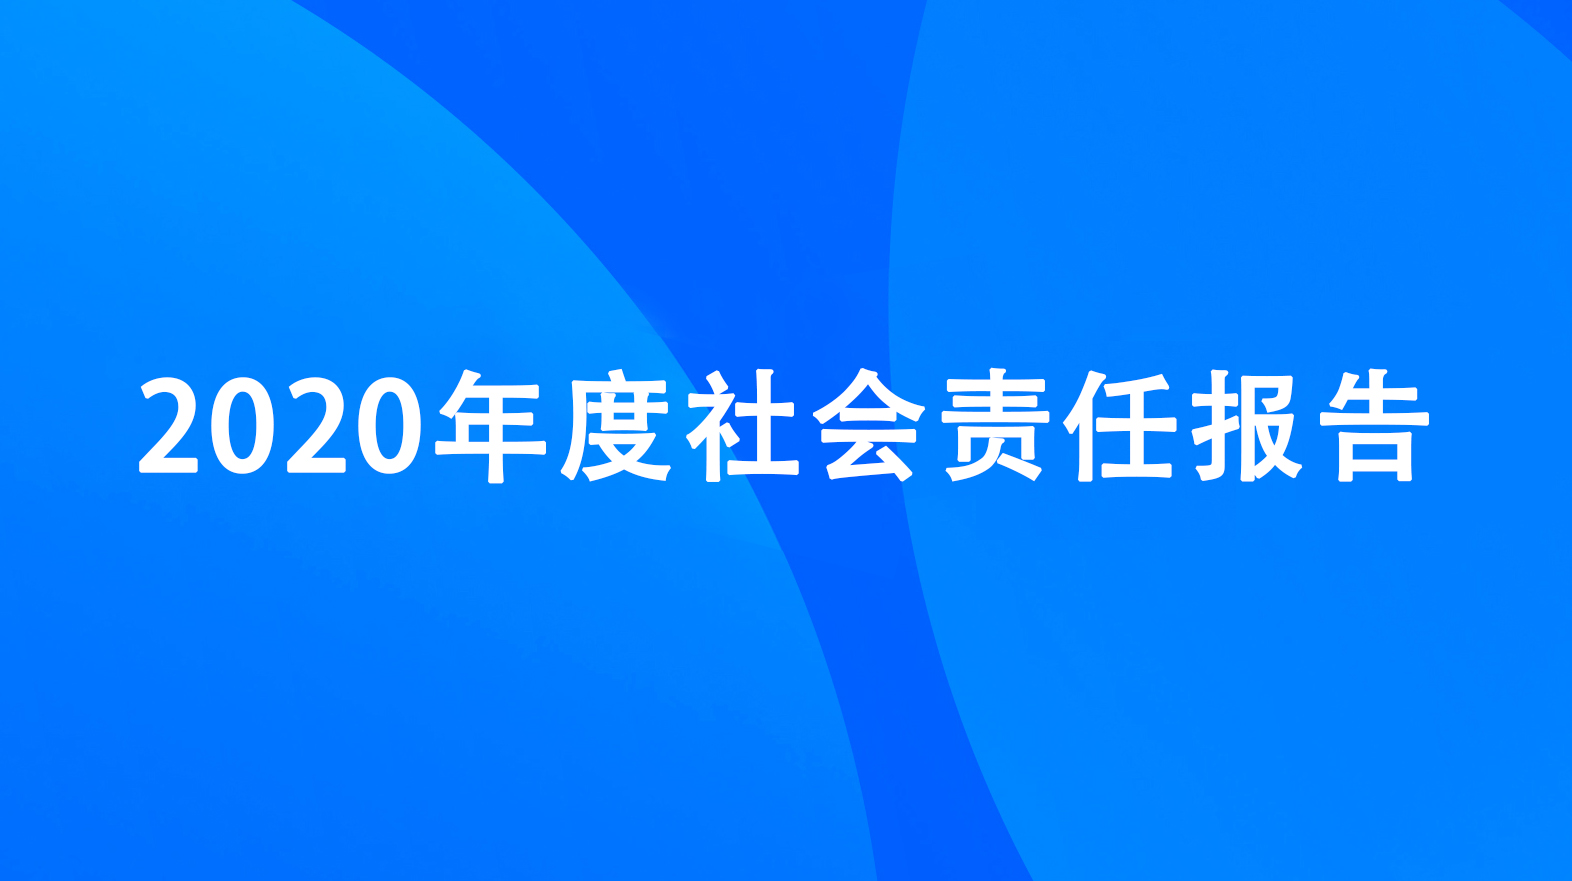 2020 Social Responsibility Report of Hangzhou Shengda Electronics Co., Ltd